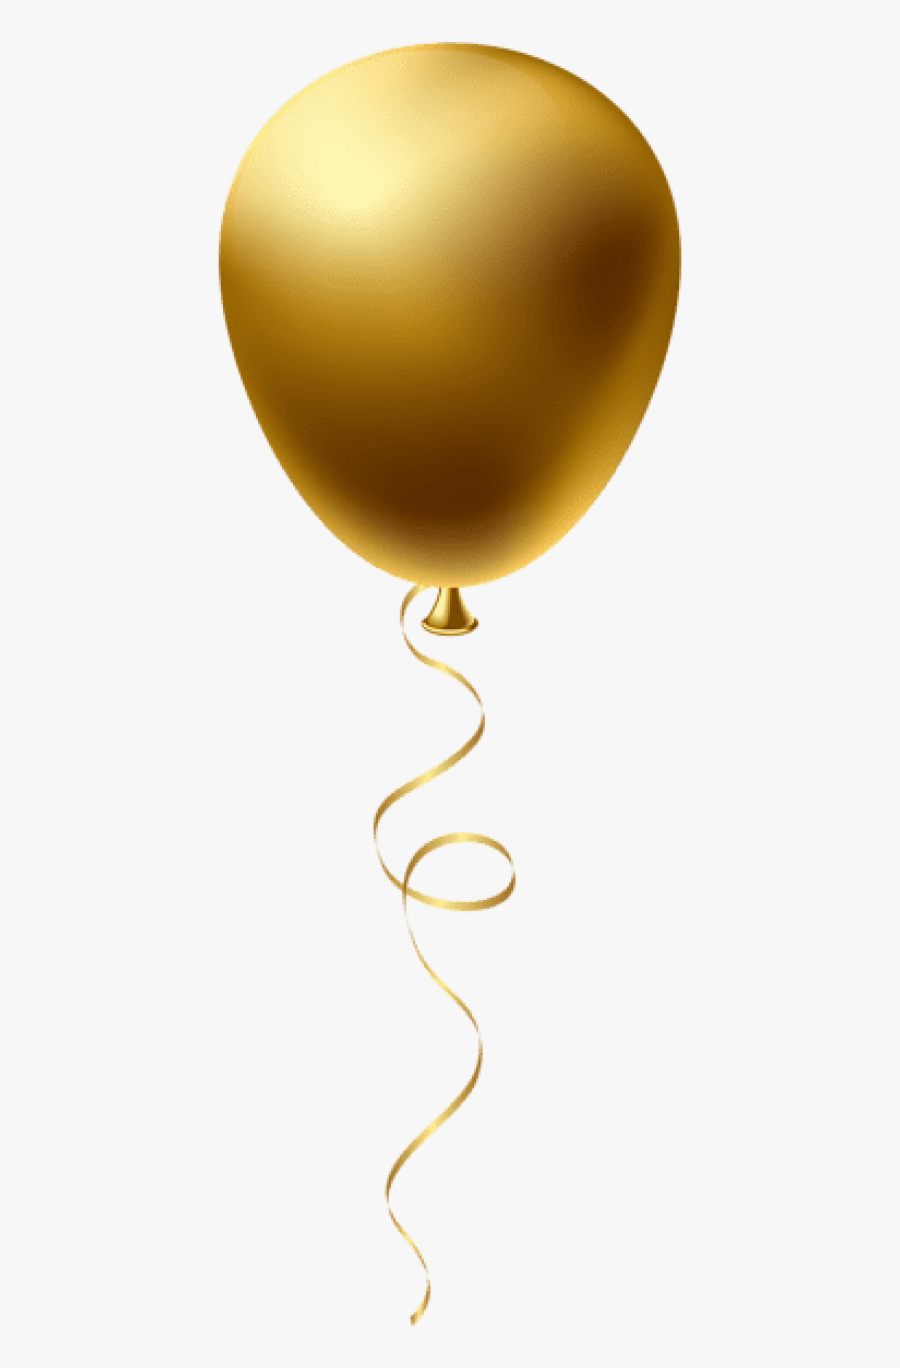 Gold Balloons Png - Transparent Gold Balloons Png, Transparent Clipart